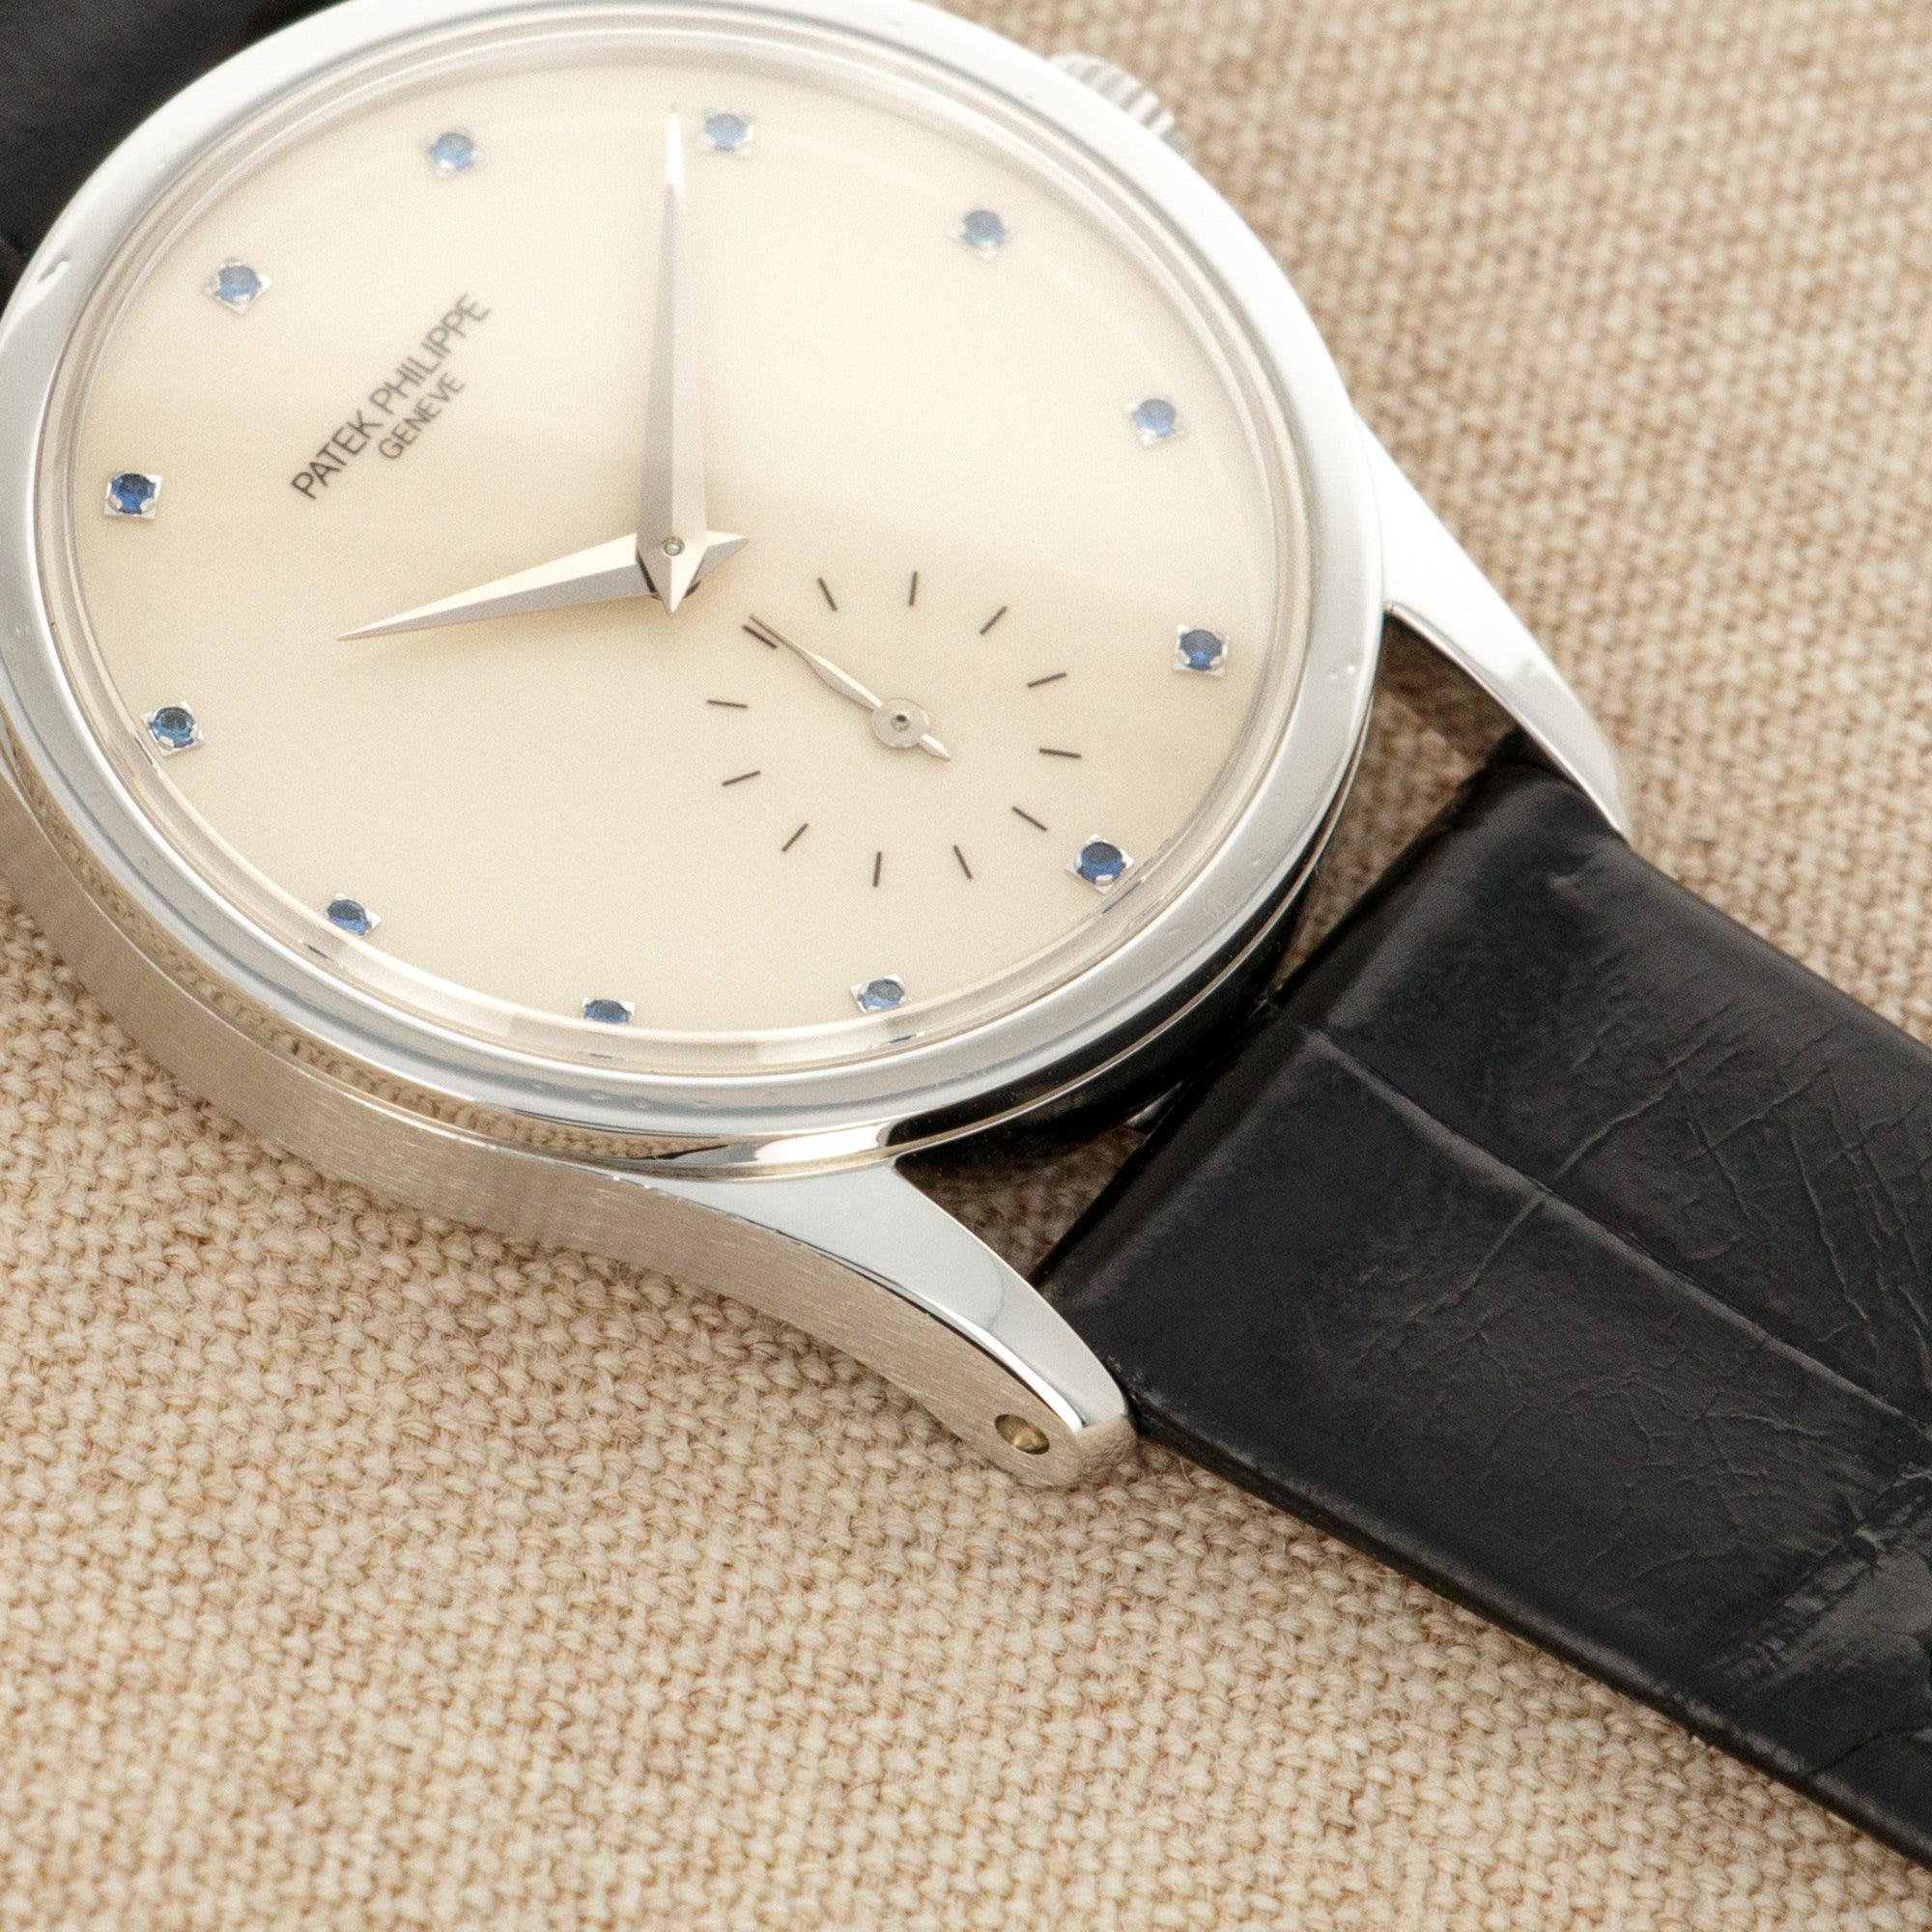 Patek Philippe - Patek Philippe Platinum Calatrava Sapphire Dial Watch Ref. 3796 - The Keystone Watches